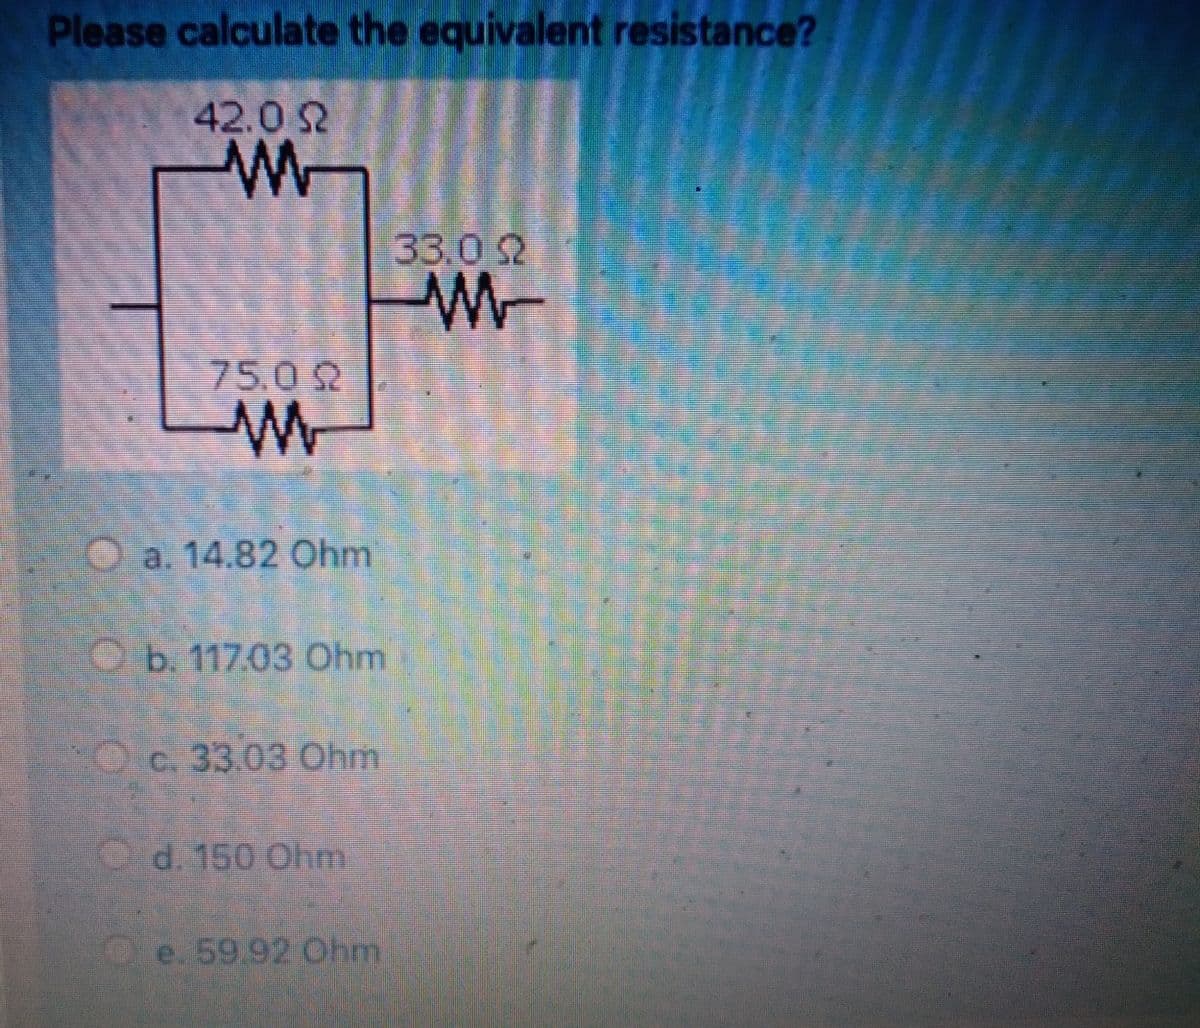 Please calculate the equivalent resistance?
42.0 Q
www
75.09
M
a. 14.82 Ohm
b. 117.03 Ohm
c33.03 Ohm
d. 150 Ohm
e. 59.92 Ohm
33.0 22
MW